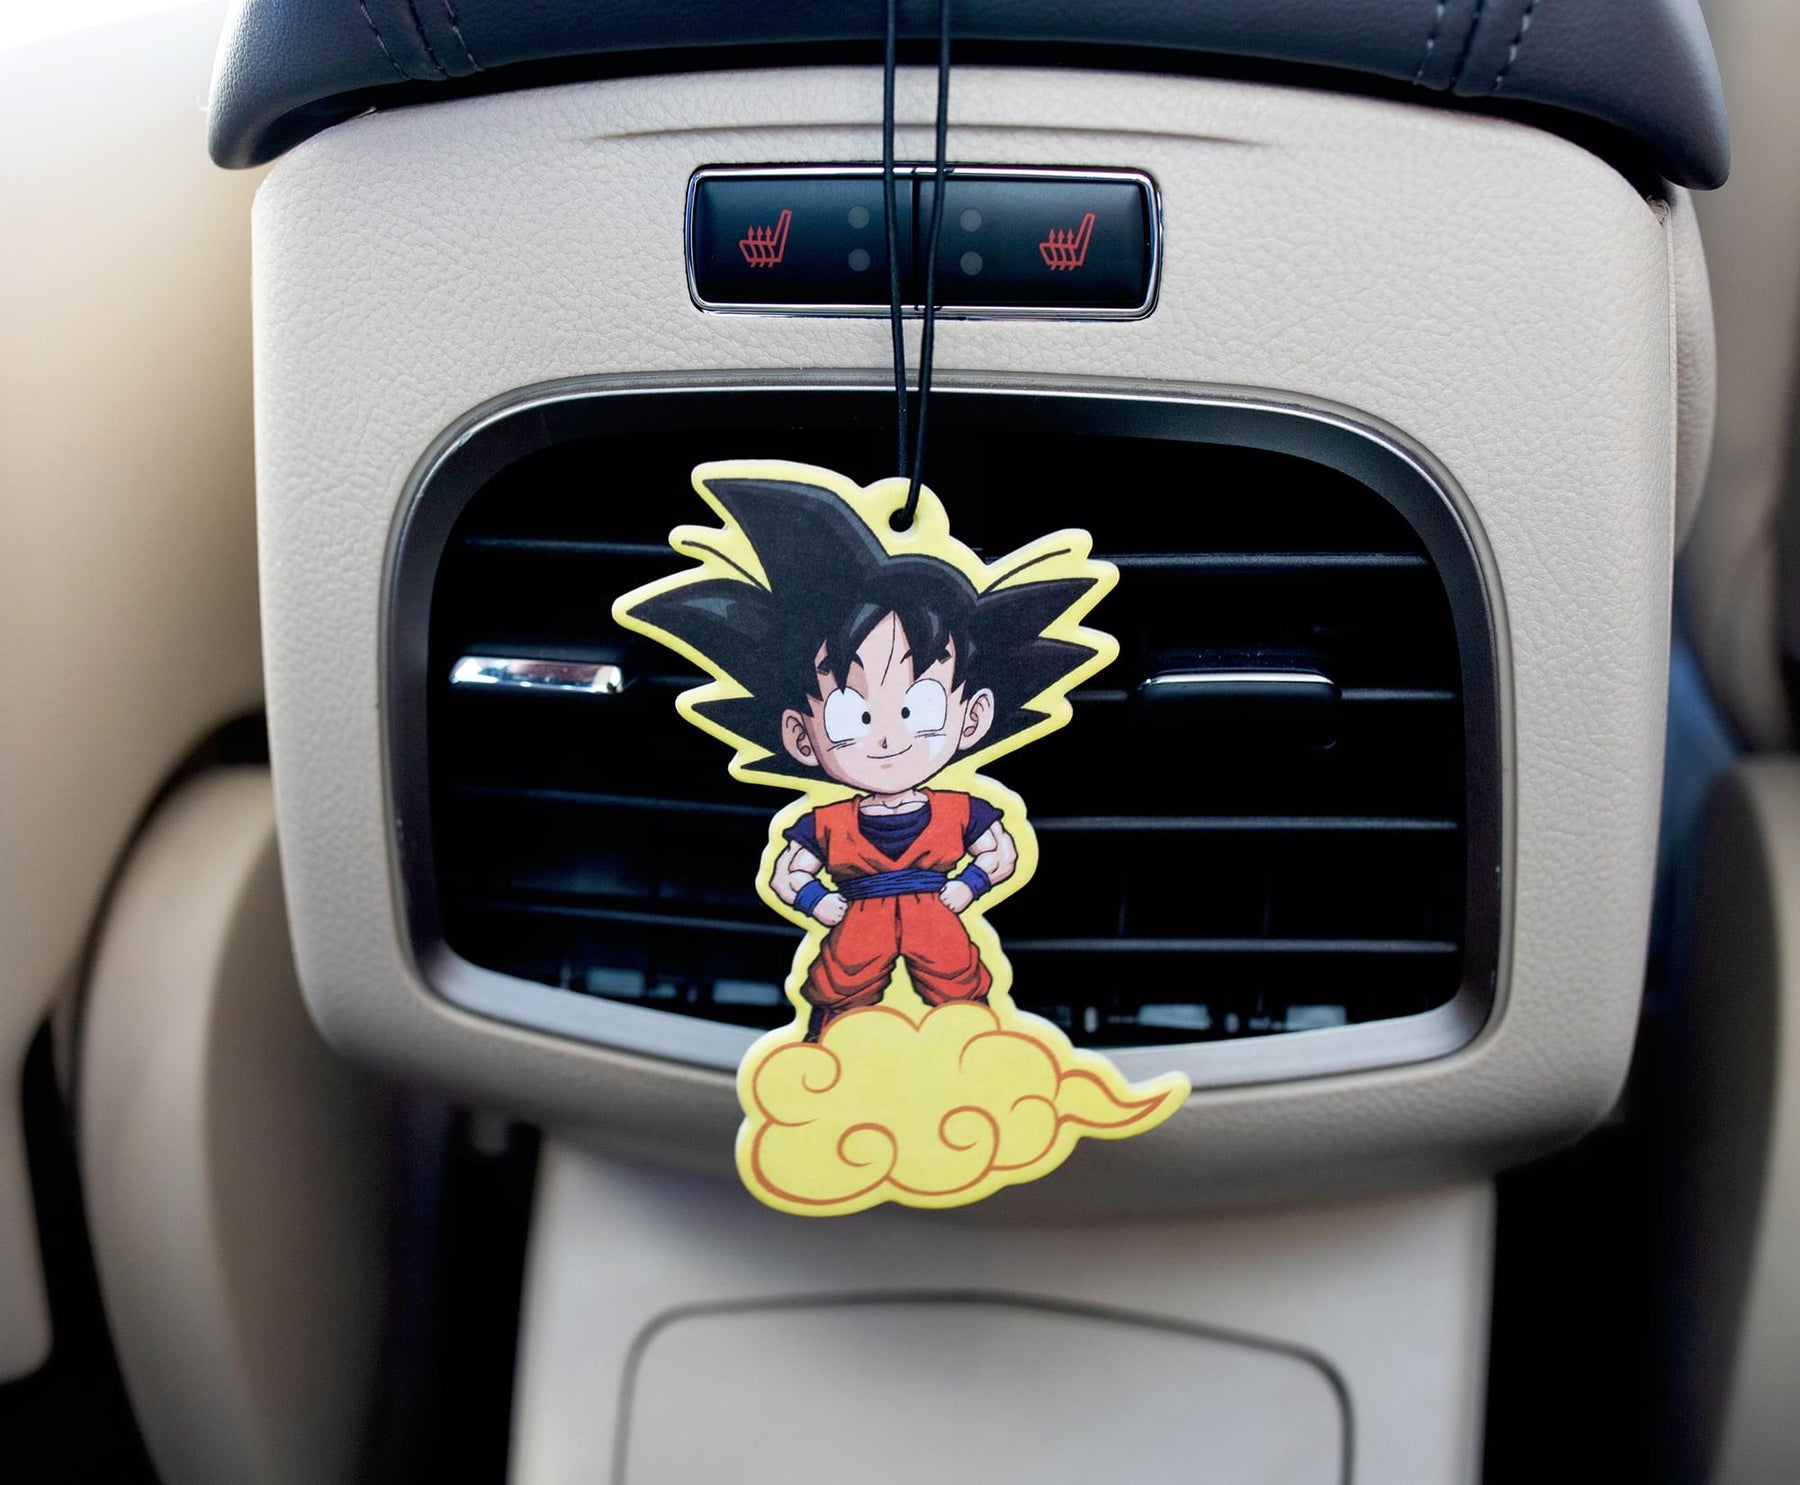 Chibi Goku Dragon Ball Z Cartoon Car Bumper Sticker Decal- 3'' or 5